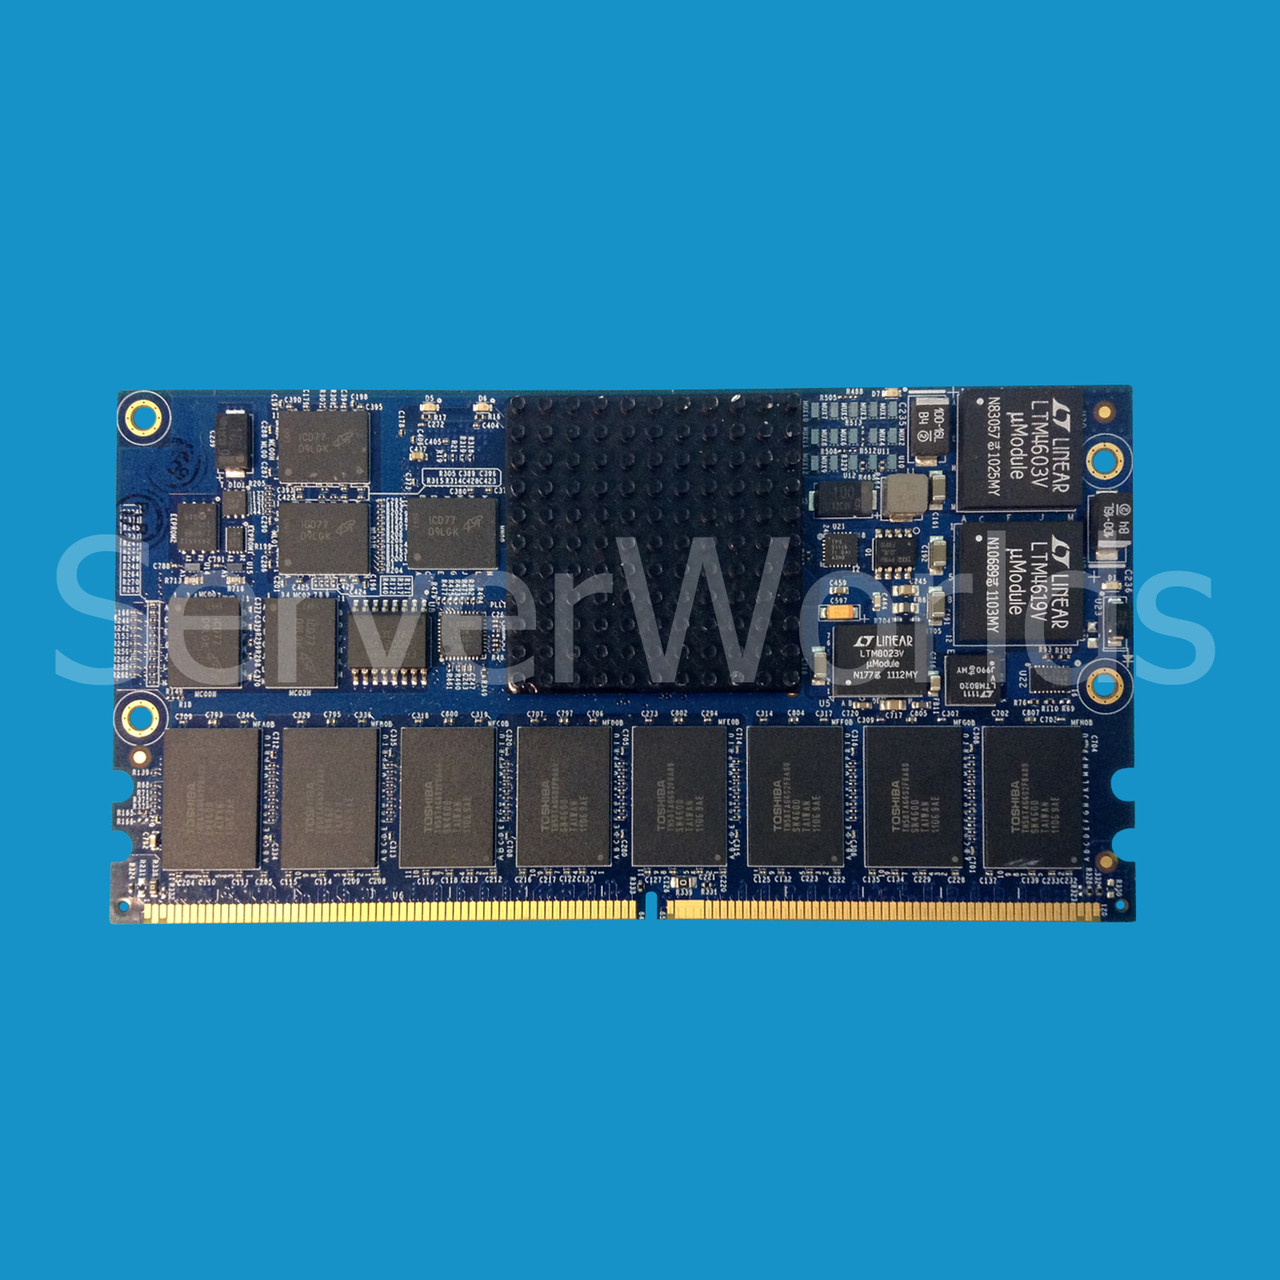 HP AM459A 128GB SLC SSD Memory Module 620-0072-00, VIMM-B-128GSLC